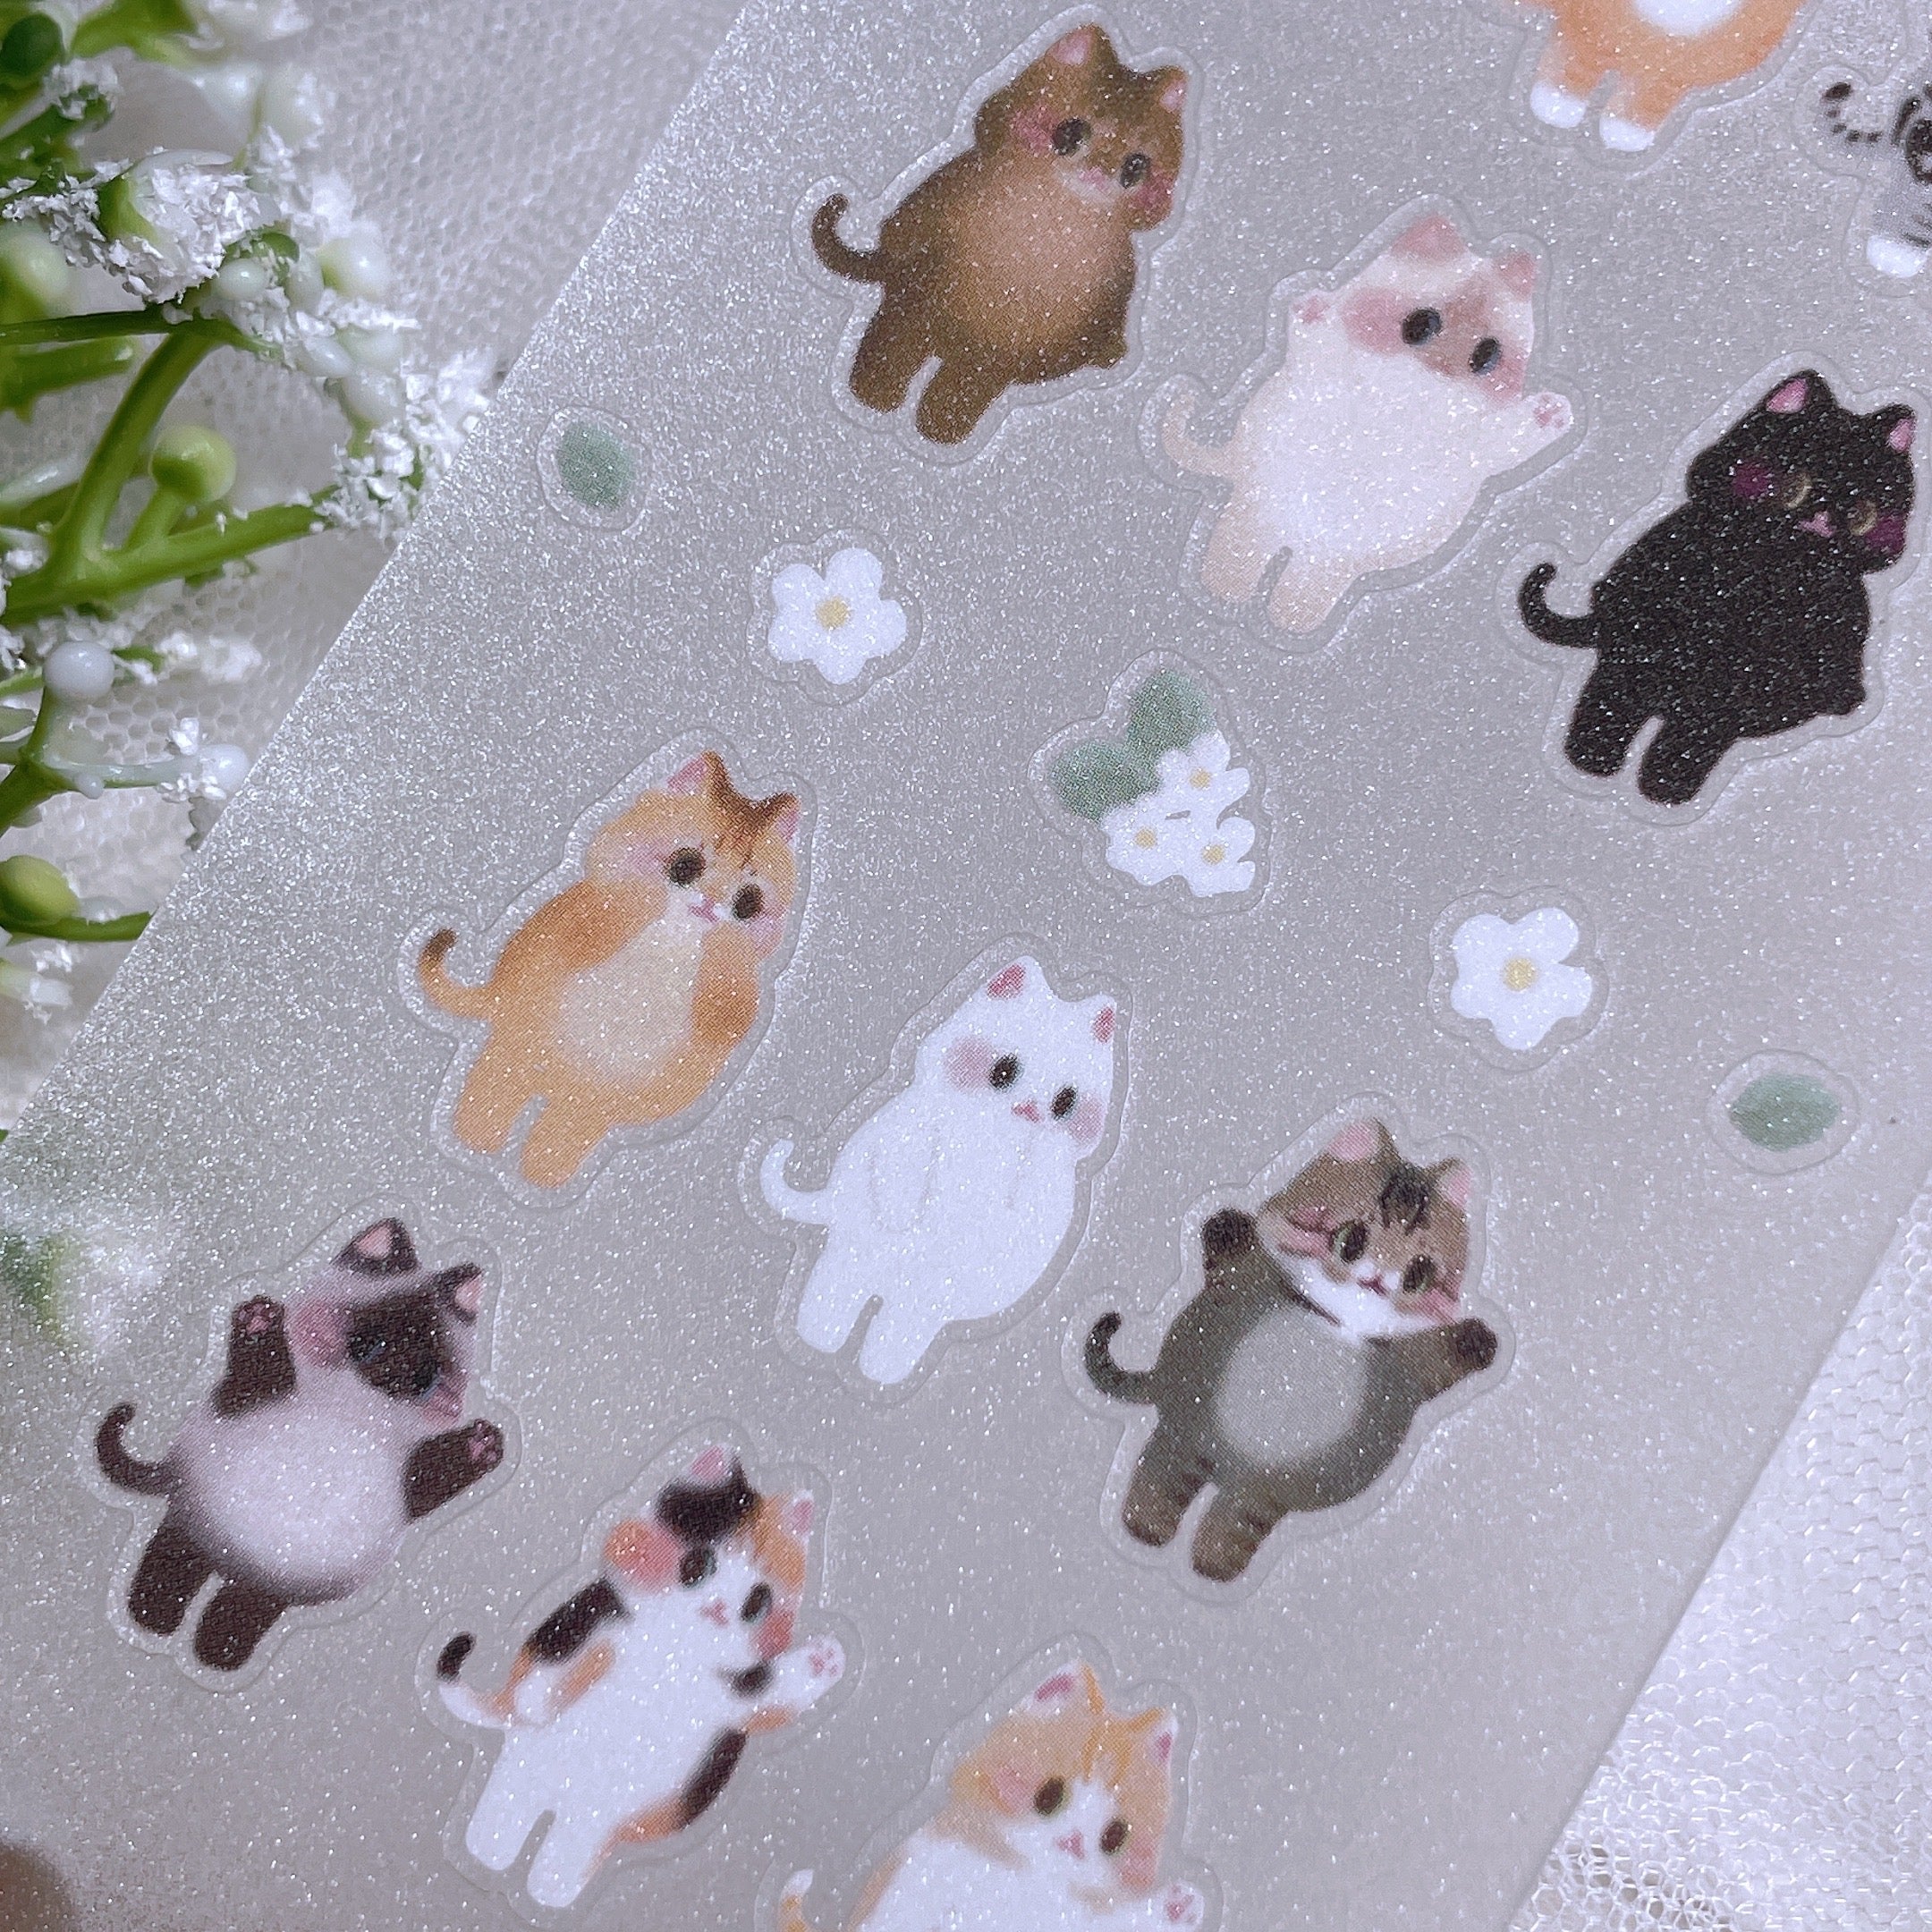 Tiny Kitties Sticker Sheet